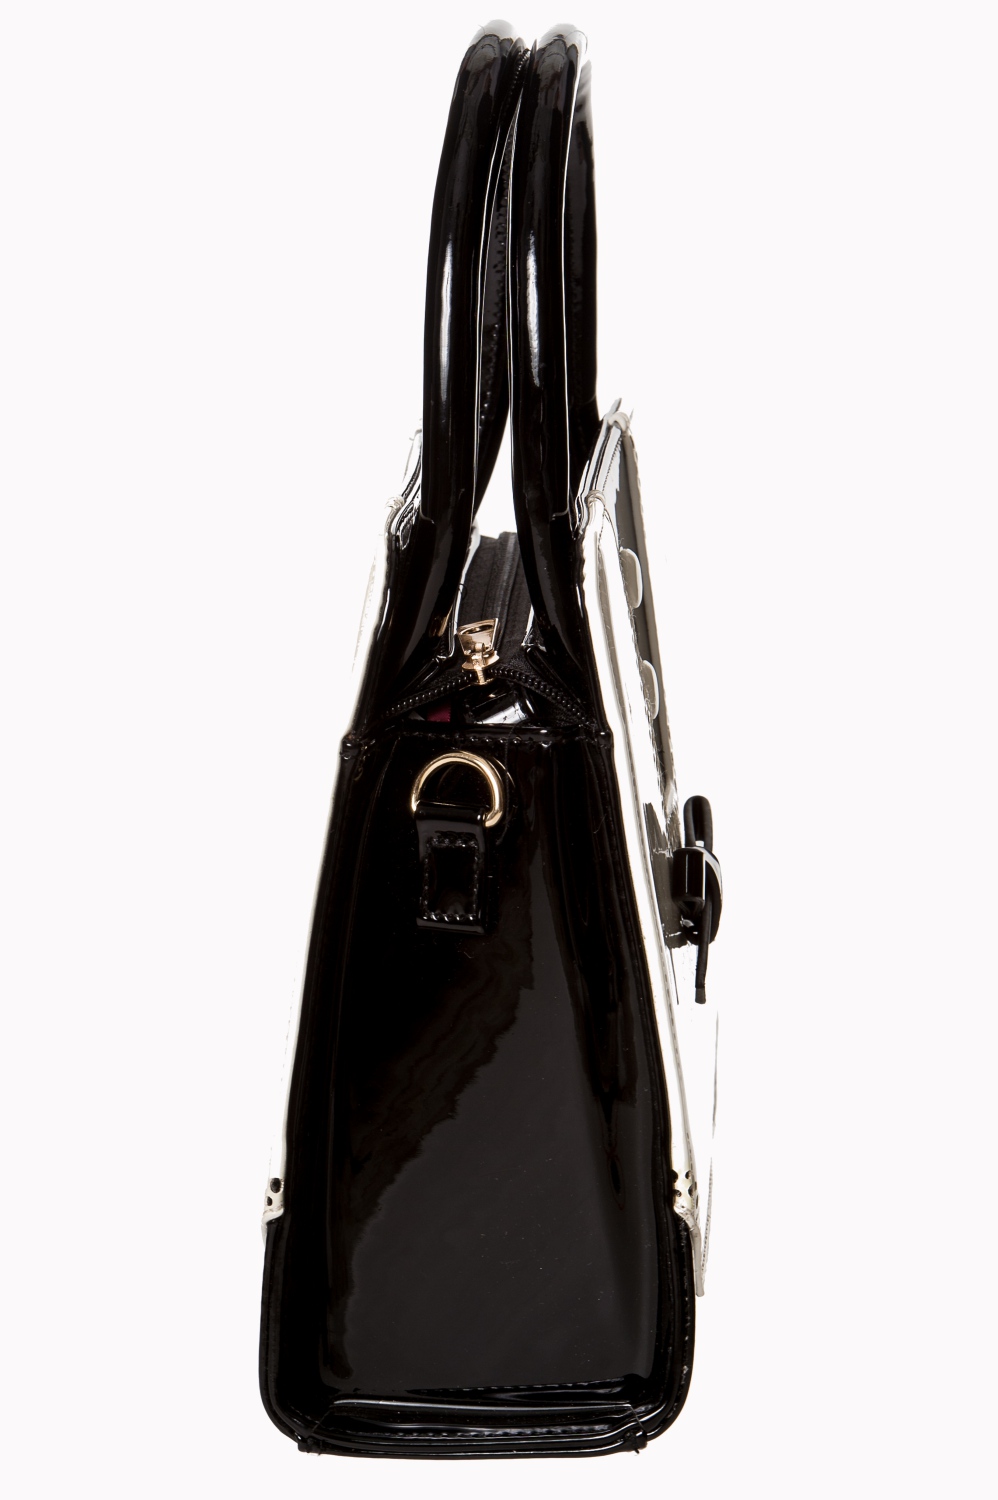 Luxurious 50s Black Cream Patent Rockabilly Tote Bag